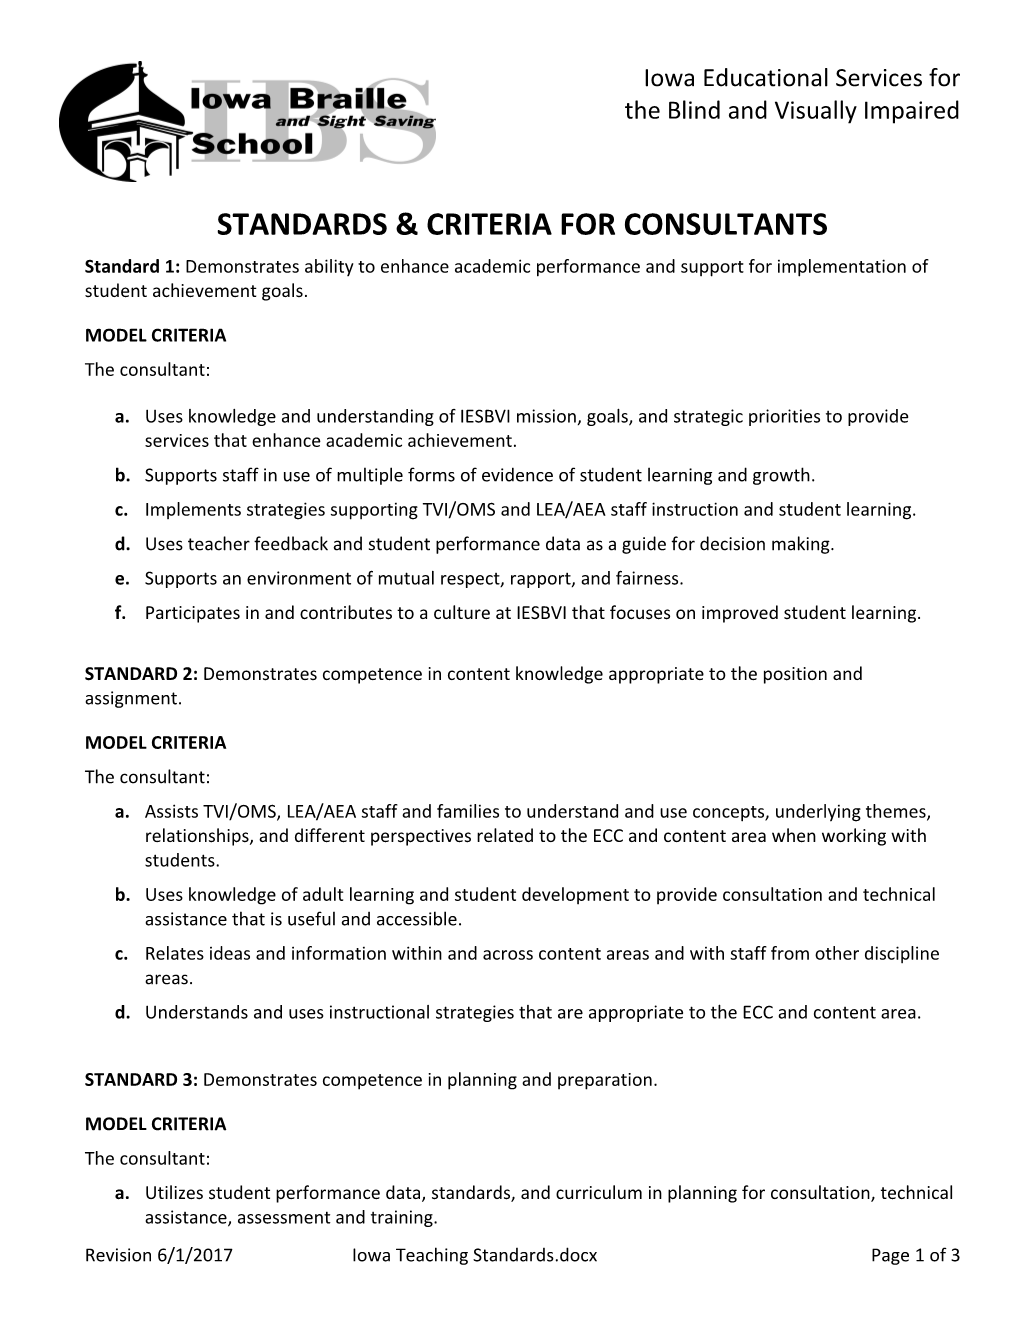 Standards & Criteria for Consultants